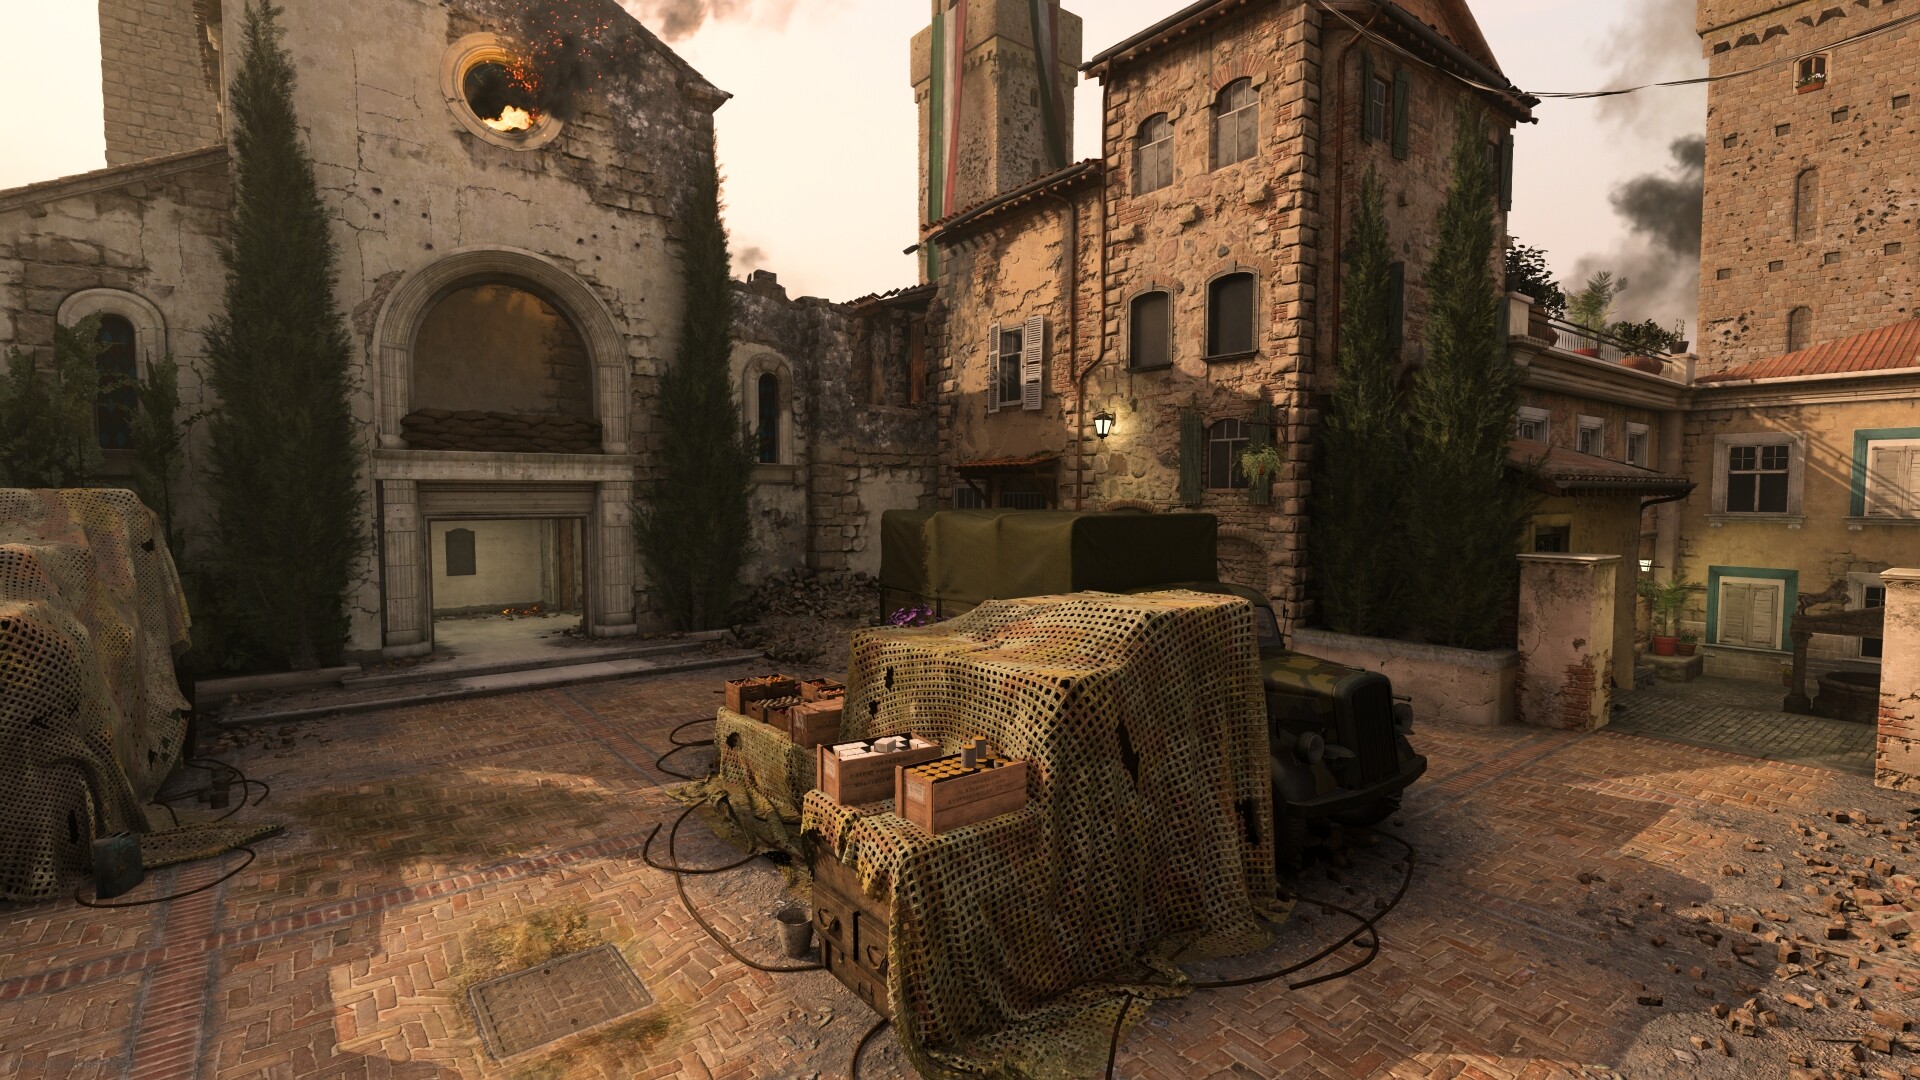 Tuscan - Vanguard - Call of Duty Maps